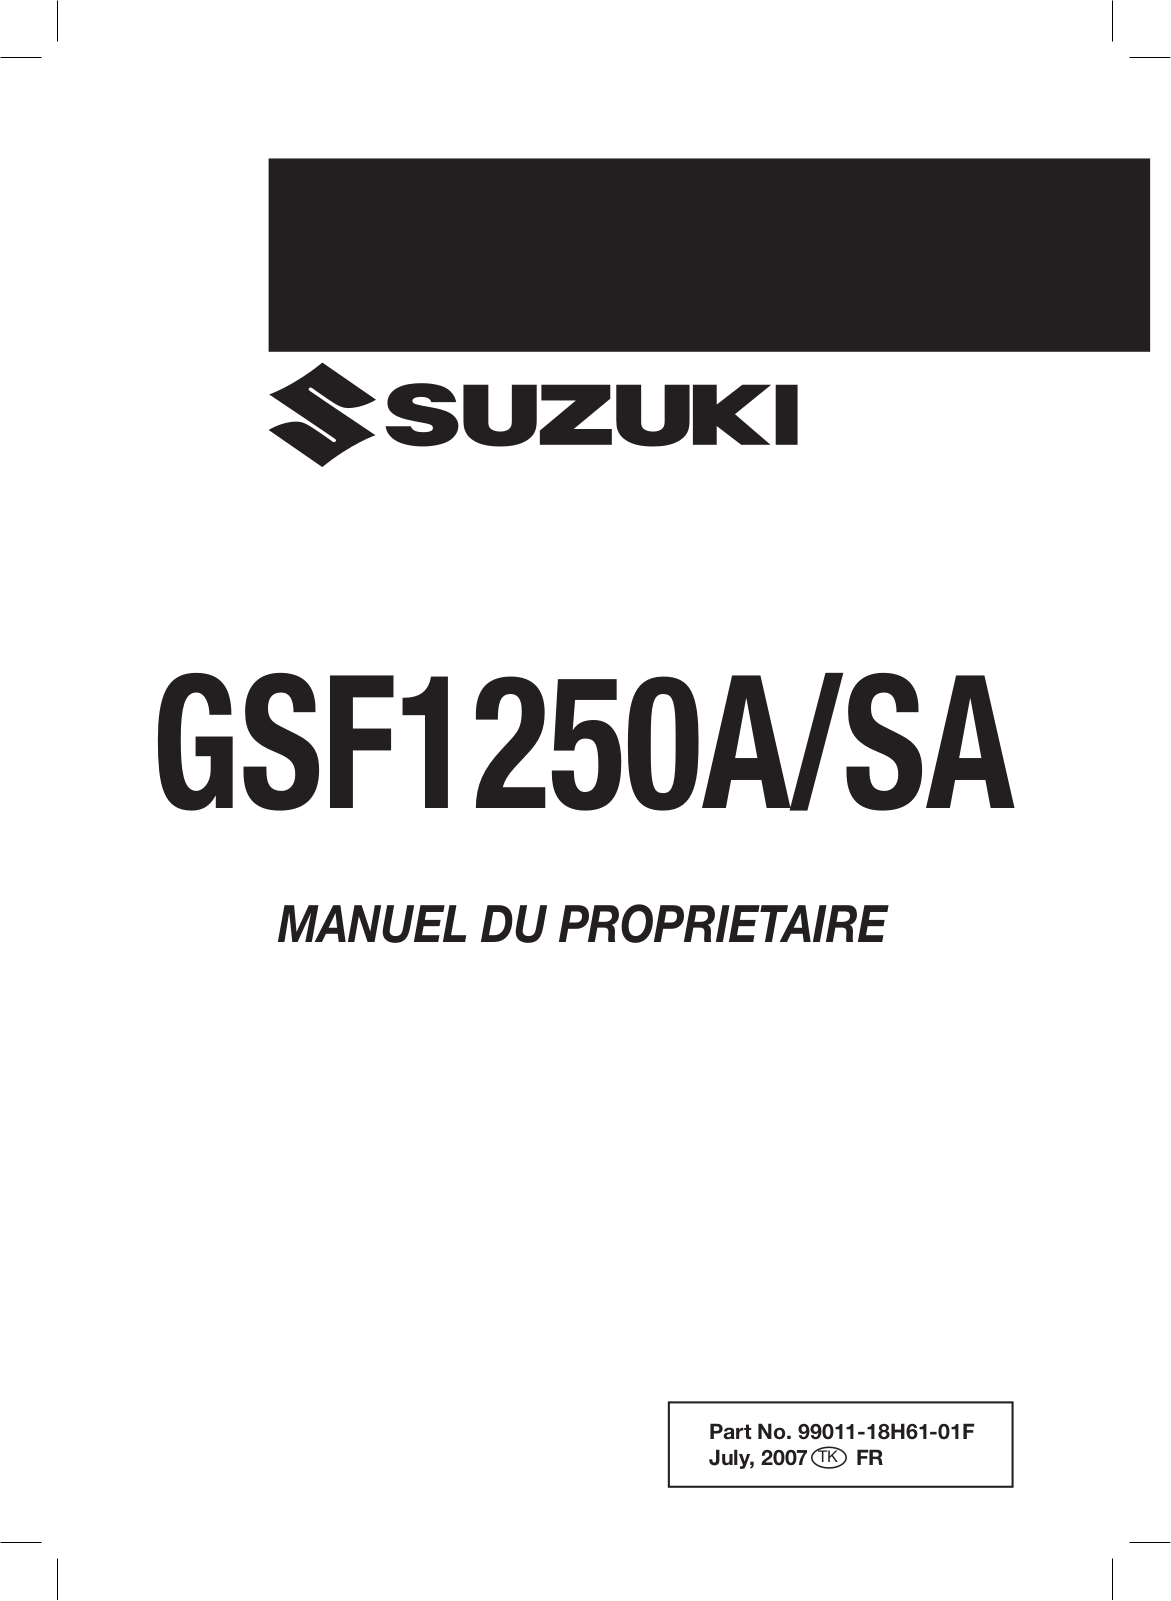 SUZUKI GSF 1250 Bandit User Manual